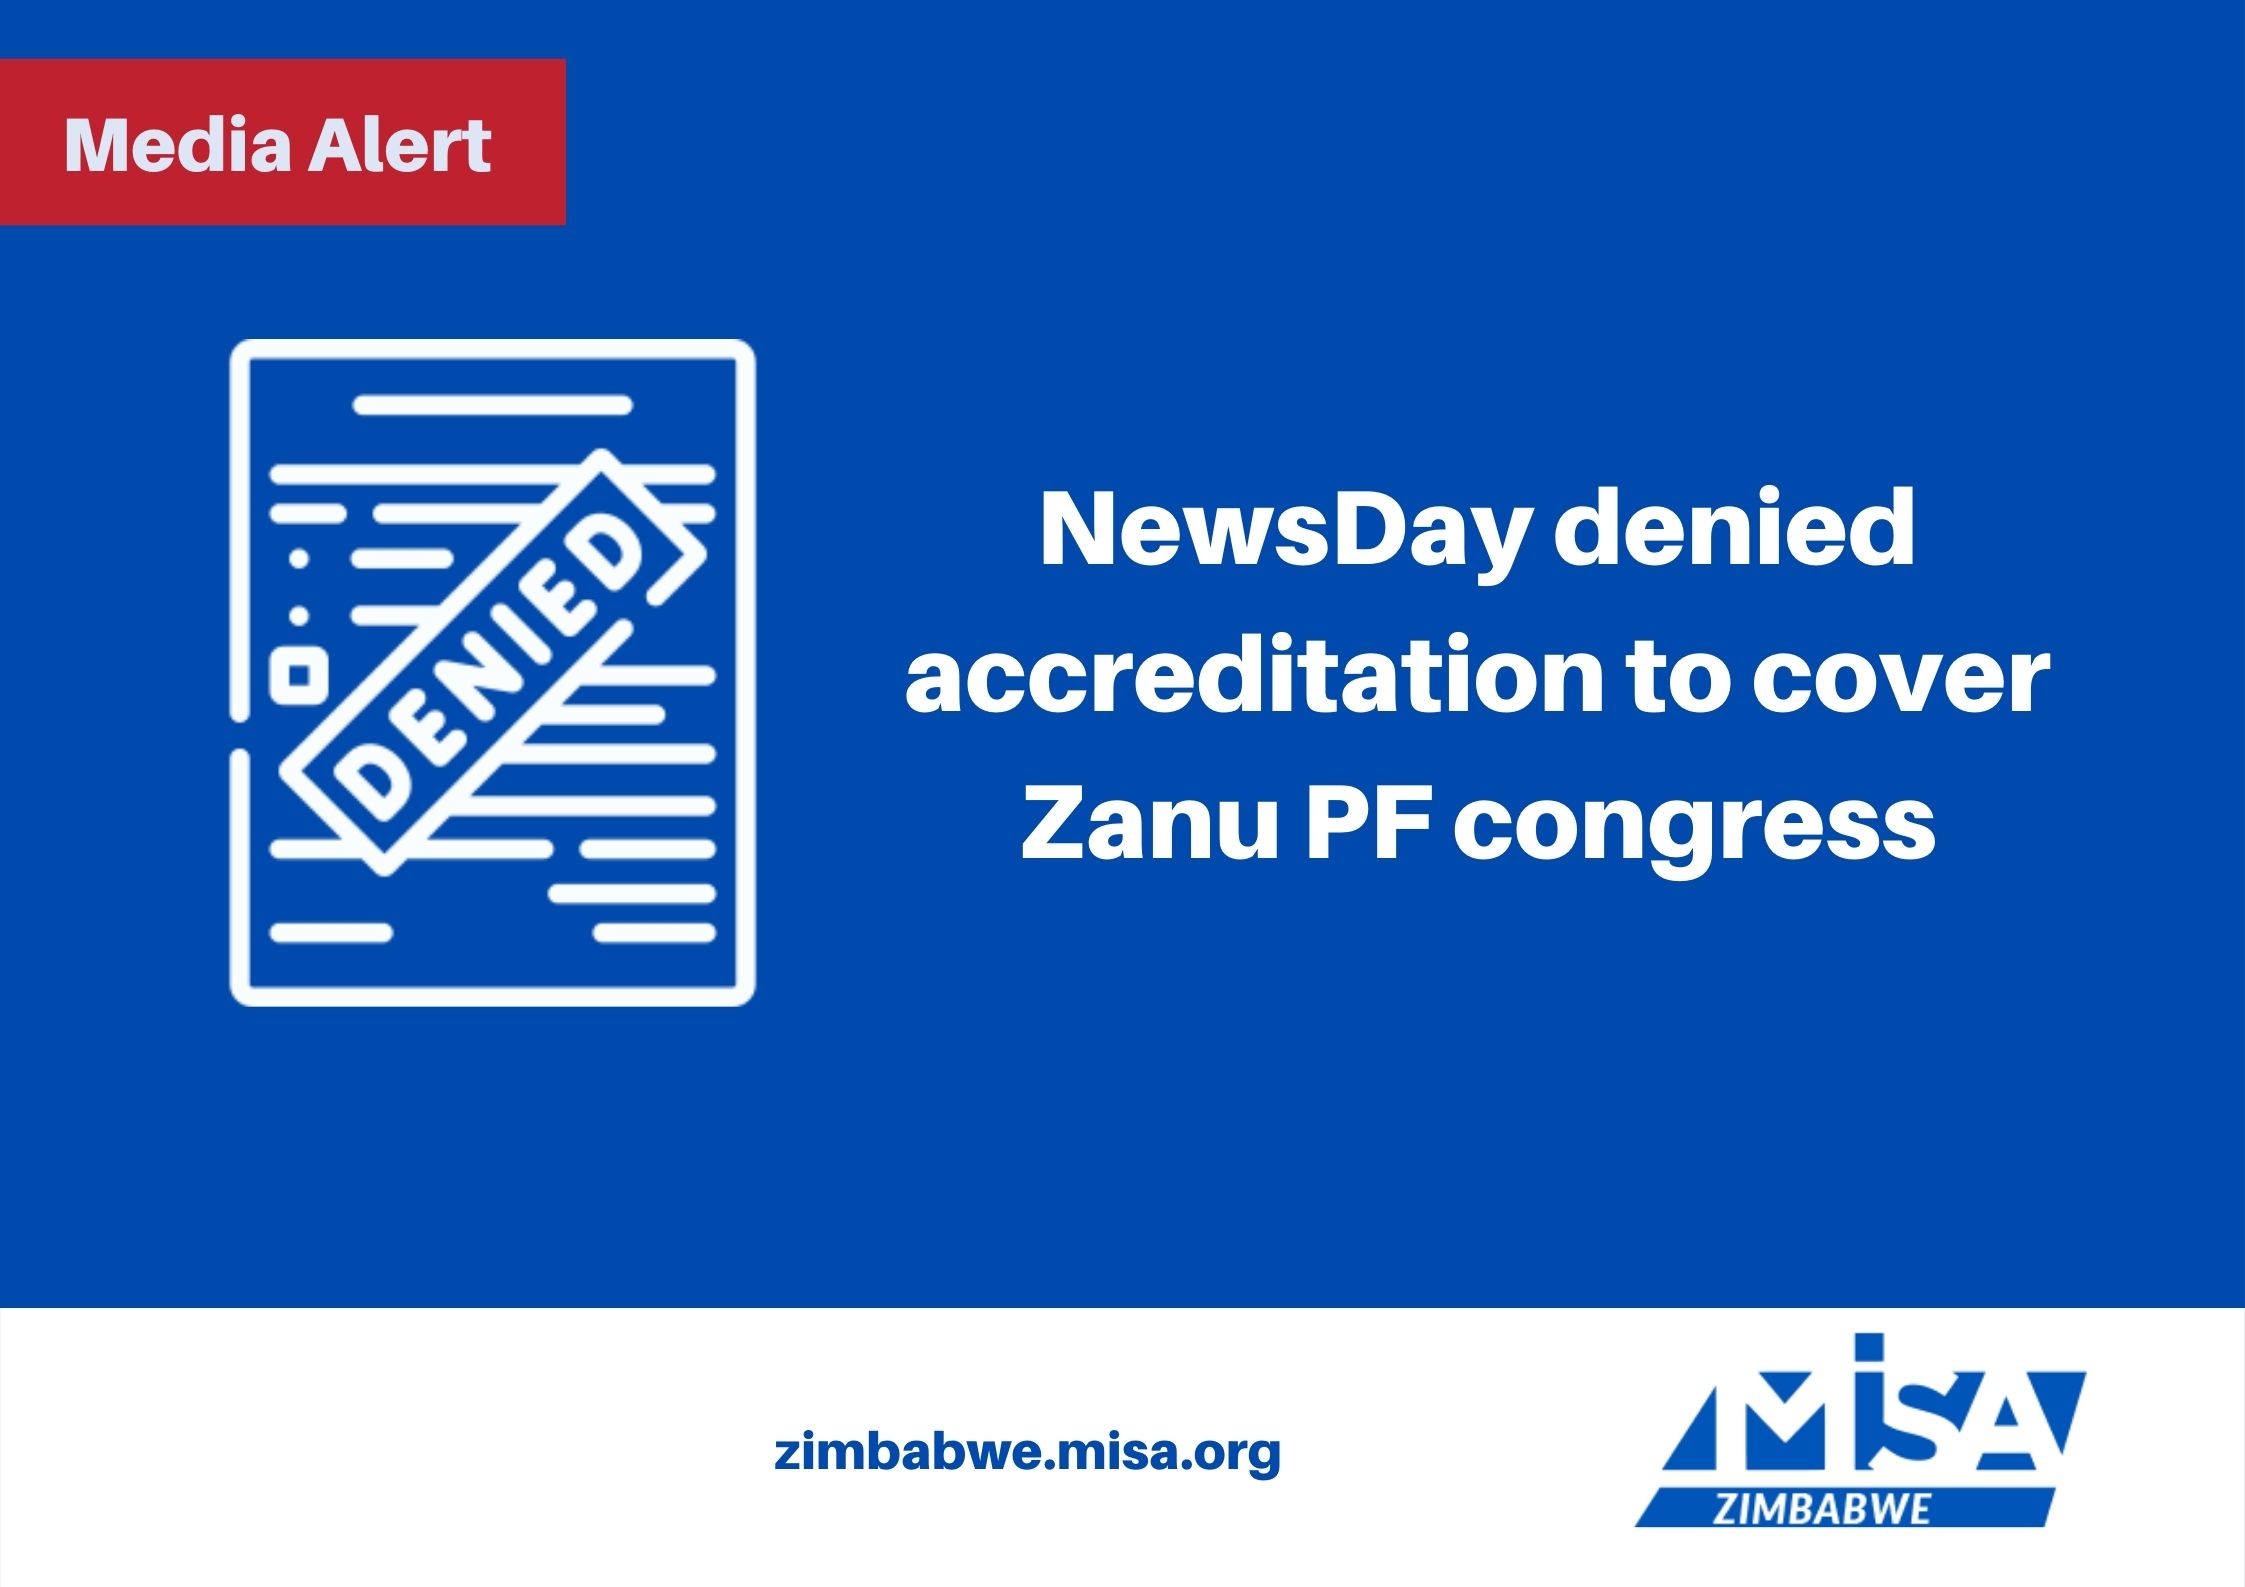 NewsDay denied accreditation to cover Zanu PF congress